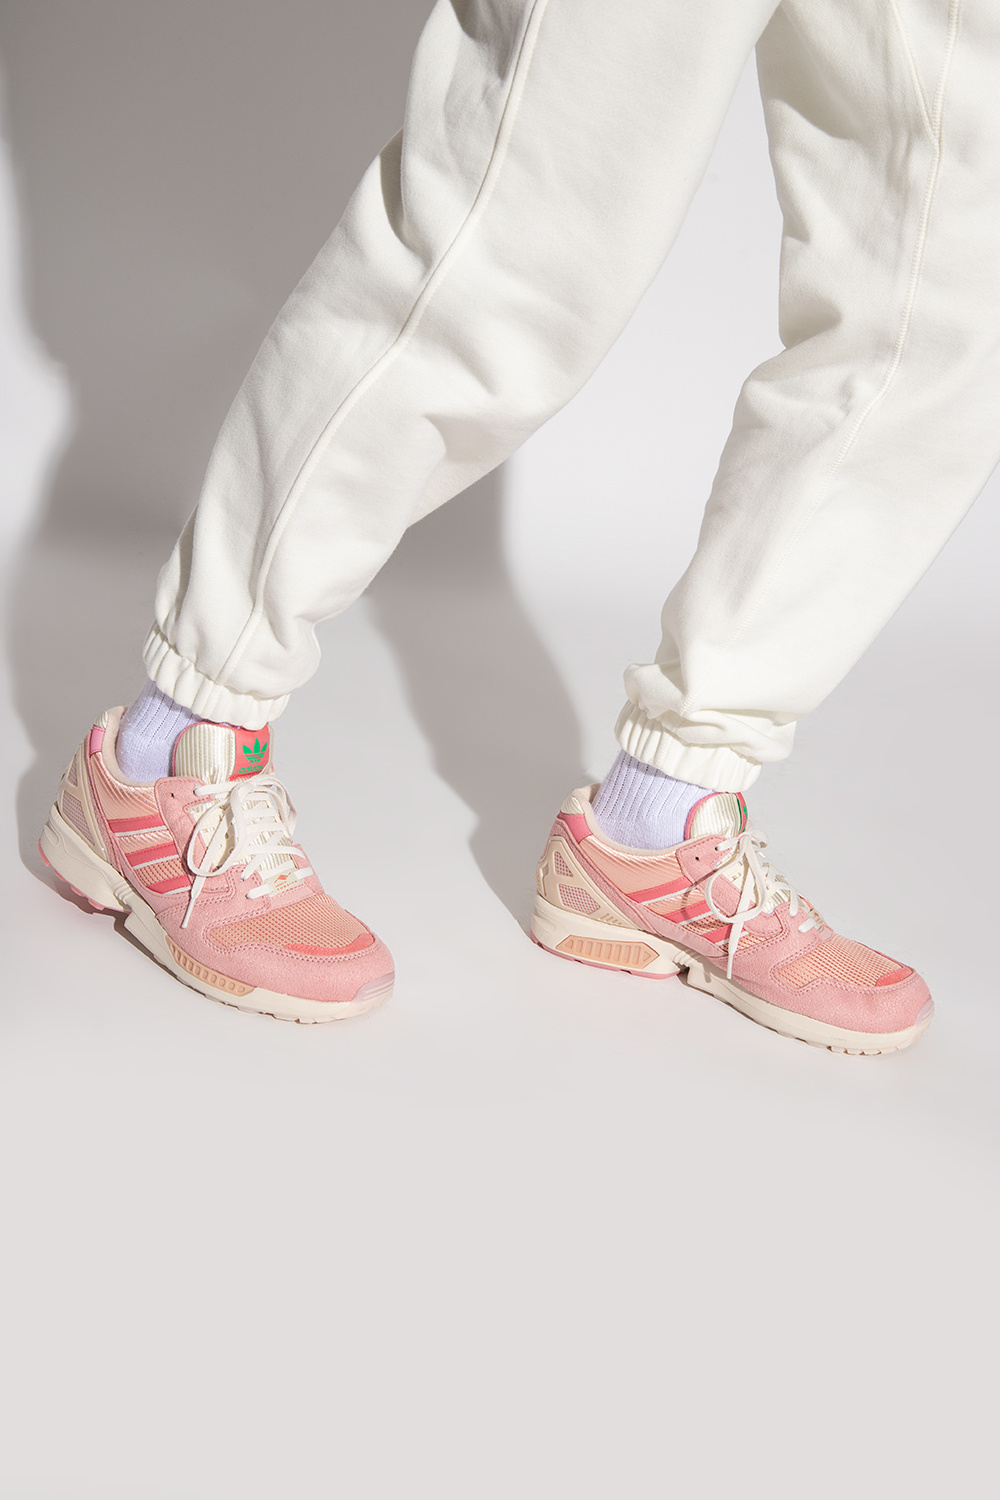 ADIDAS Originals 'ZX 8000 Strawberry Latte' sneakers | Men's Shoes